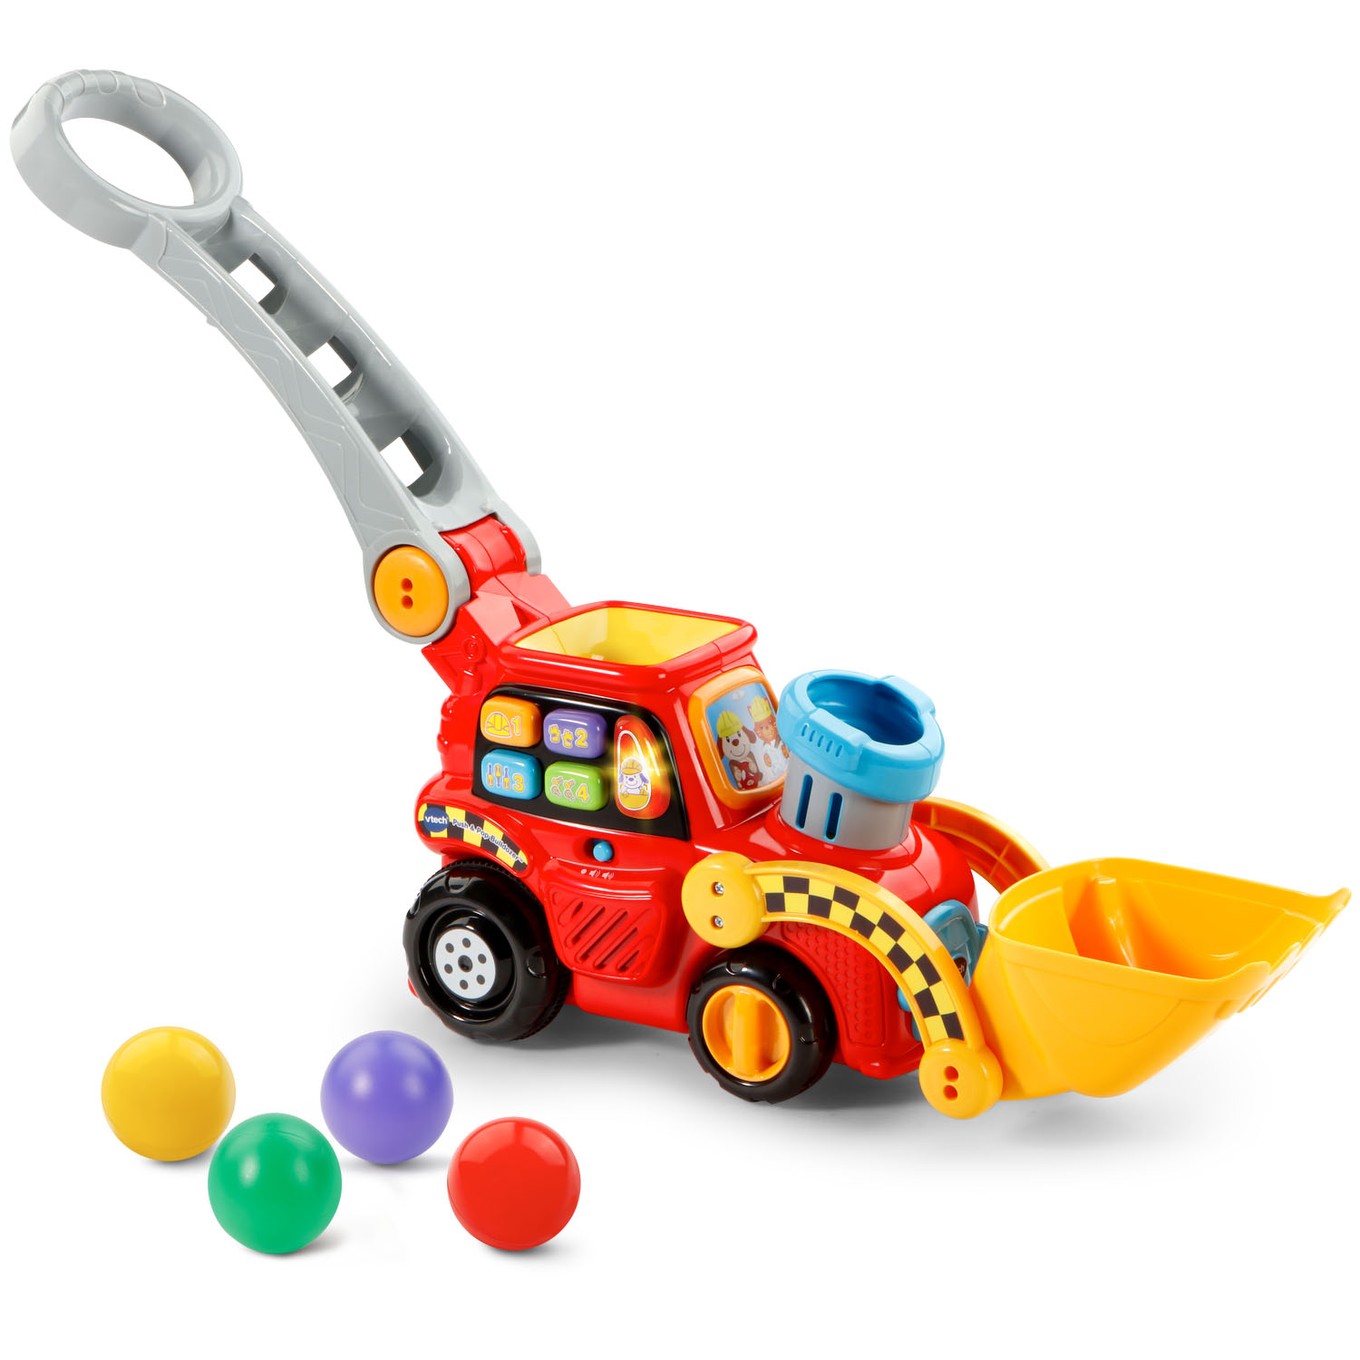 vtech push & pop bulldozer toy